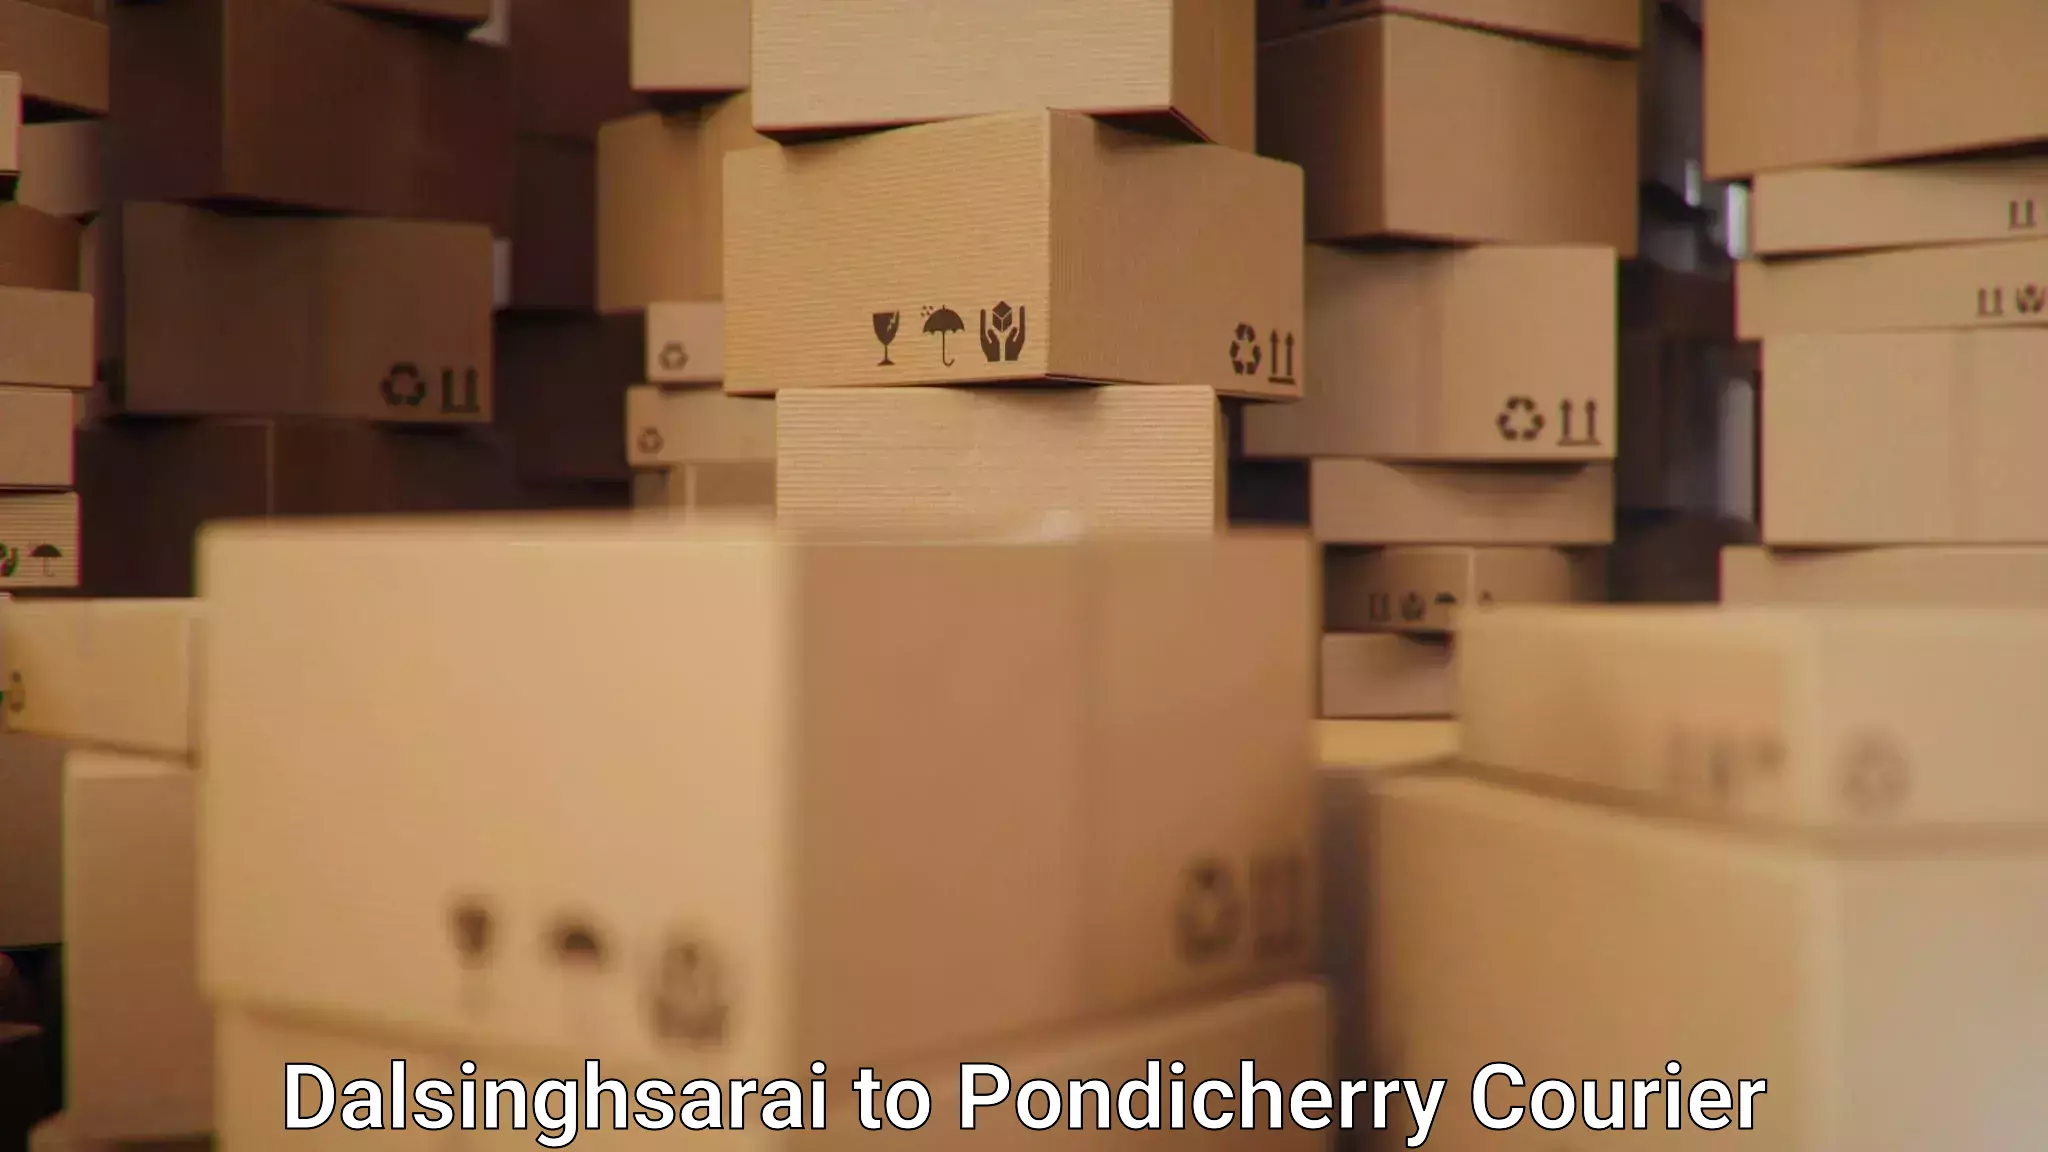 Business delivery service Dalsinghsarai to Pondicherry University